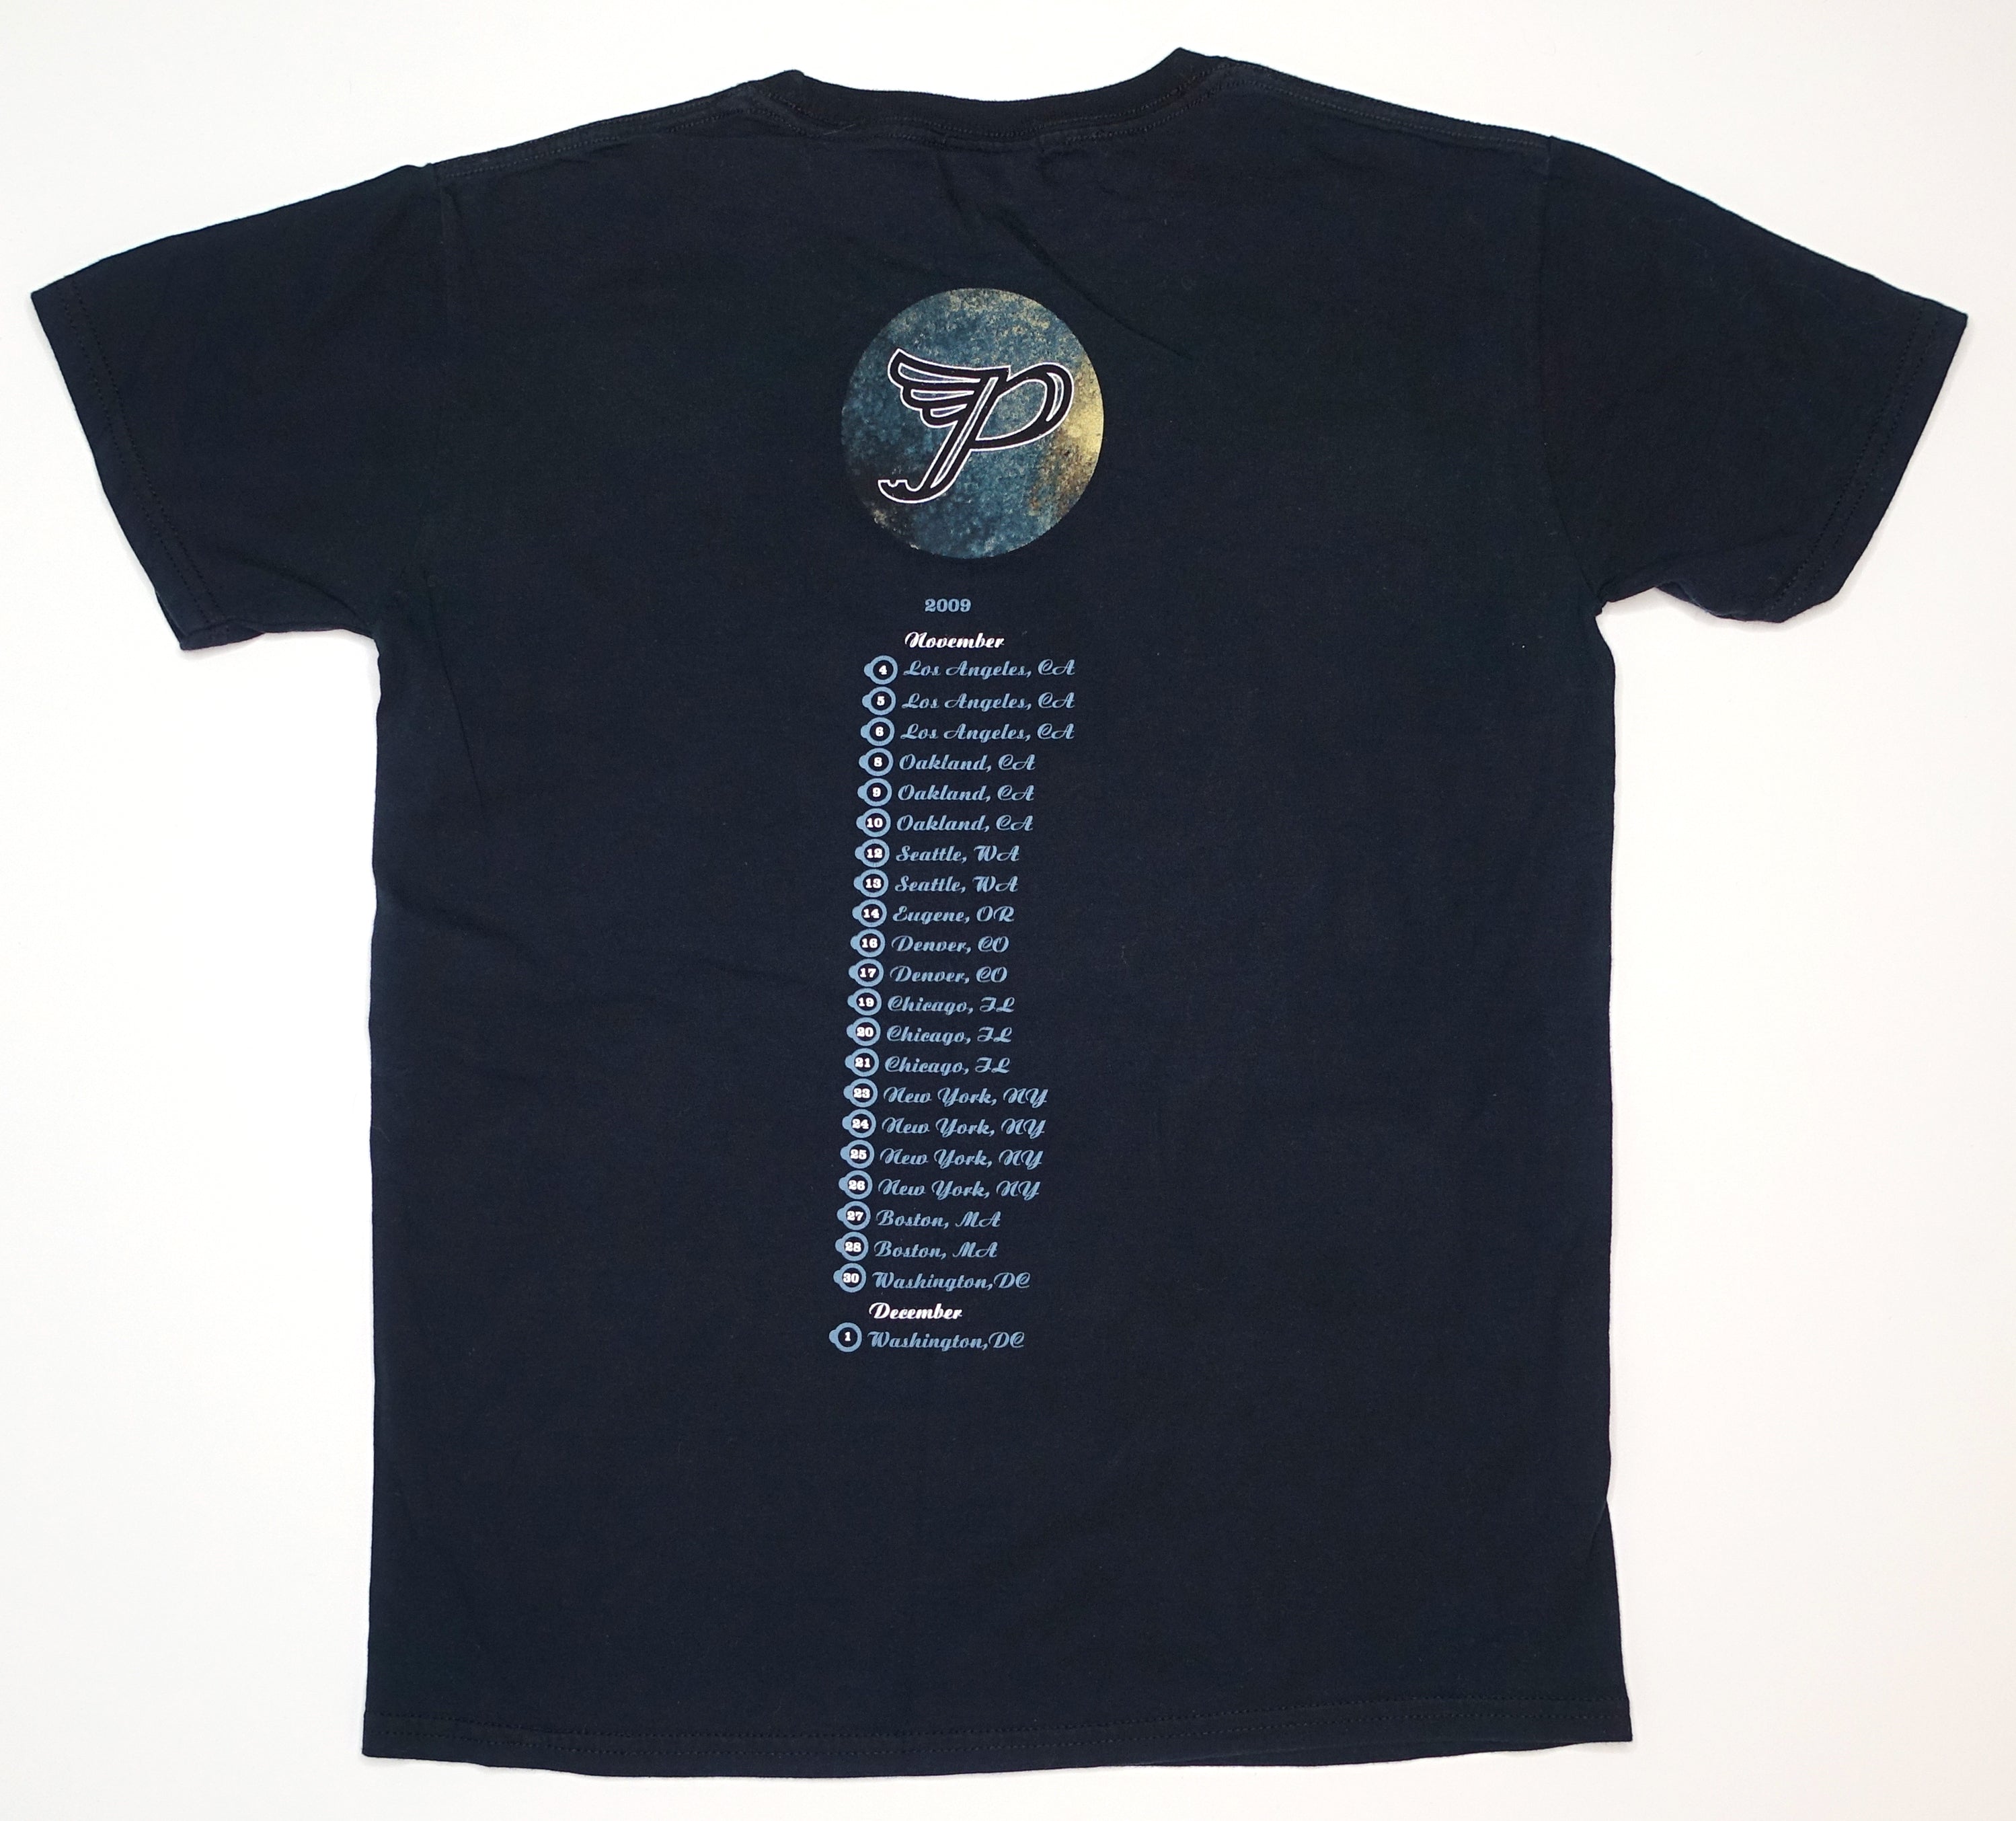 Pixies - Doolittle 2009 Tour Shirt Size Small